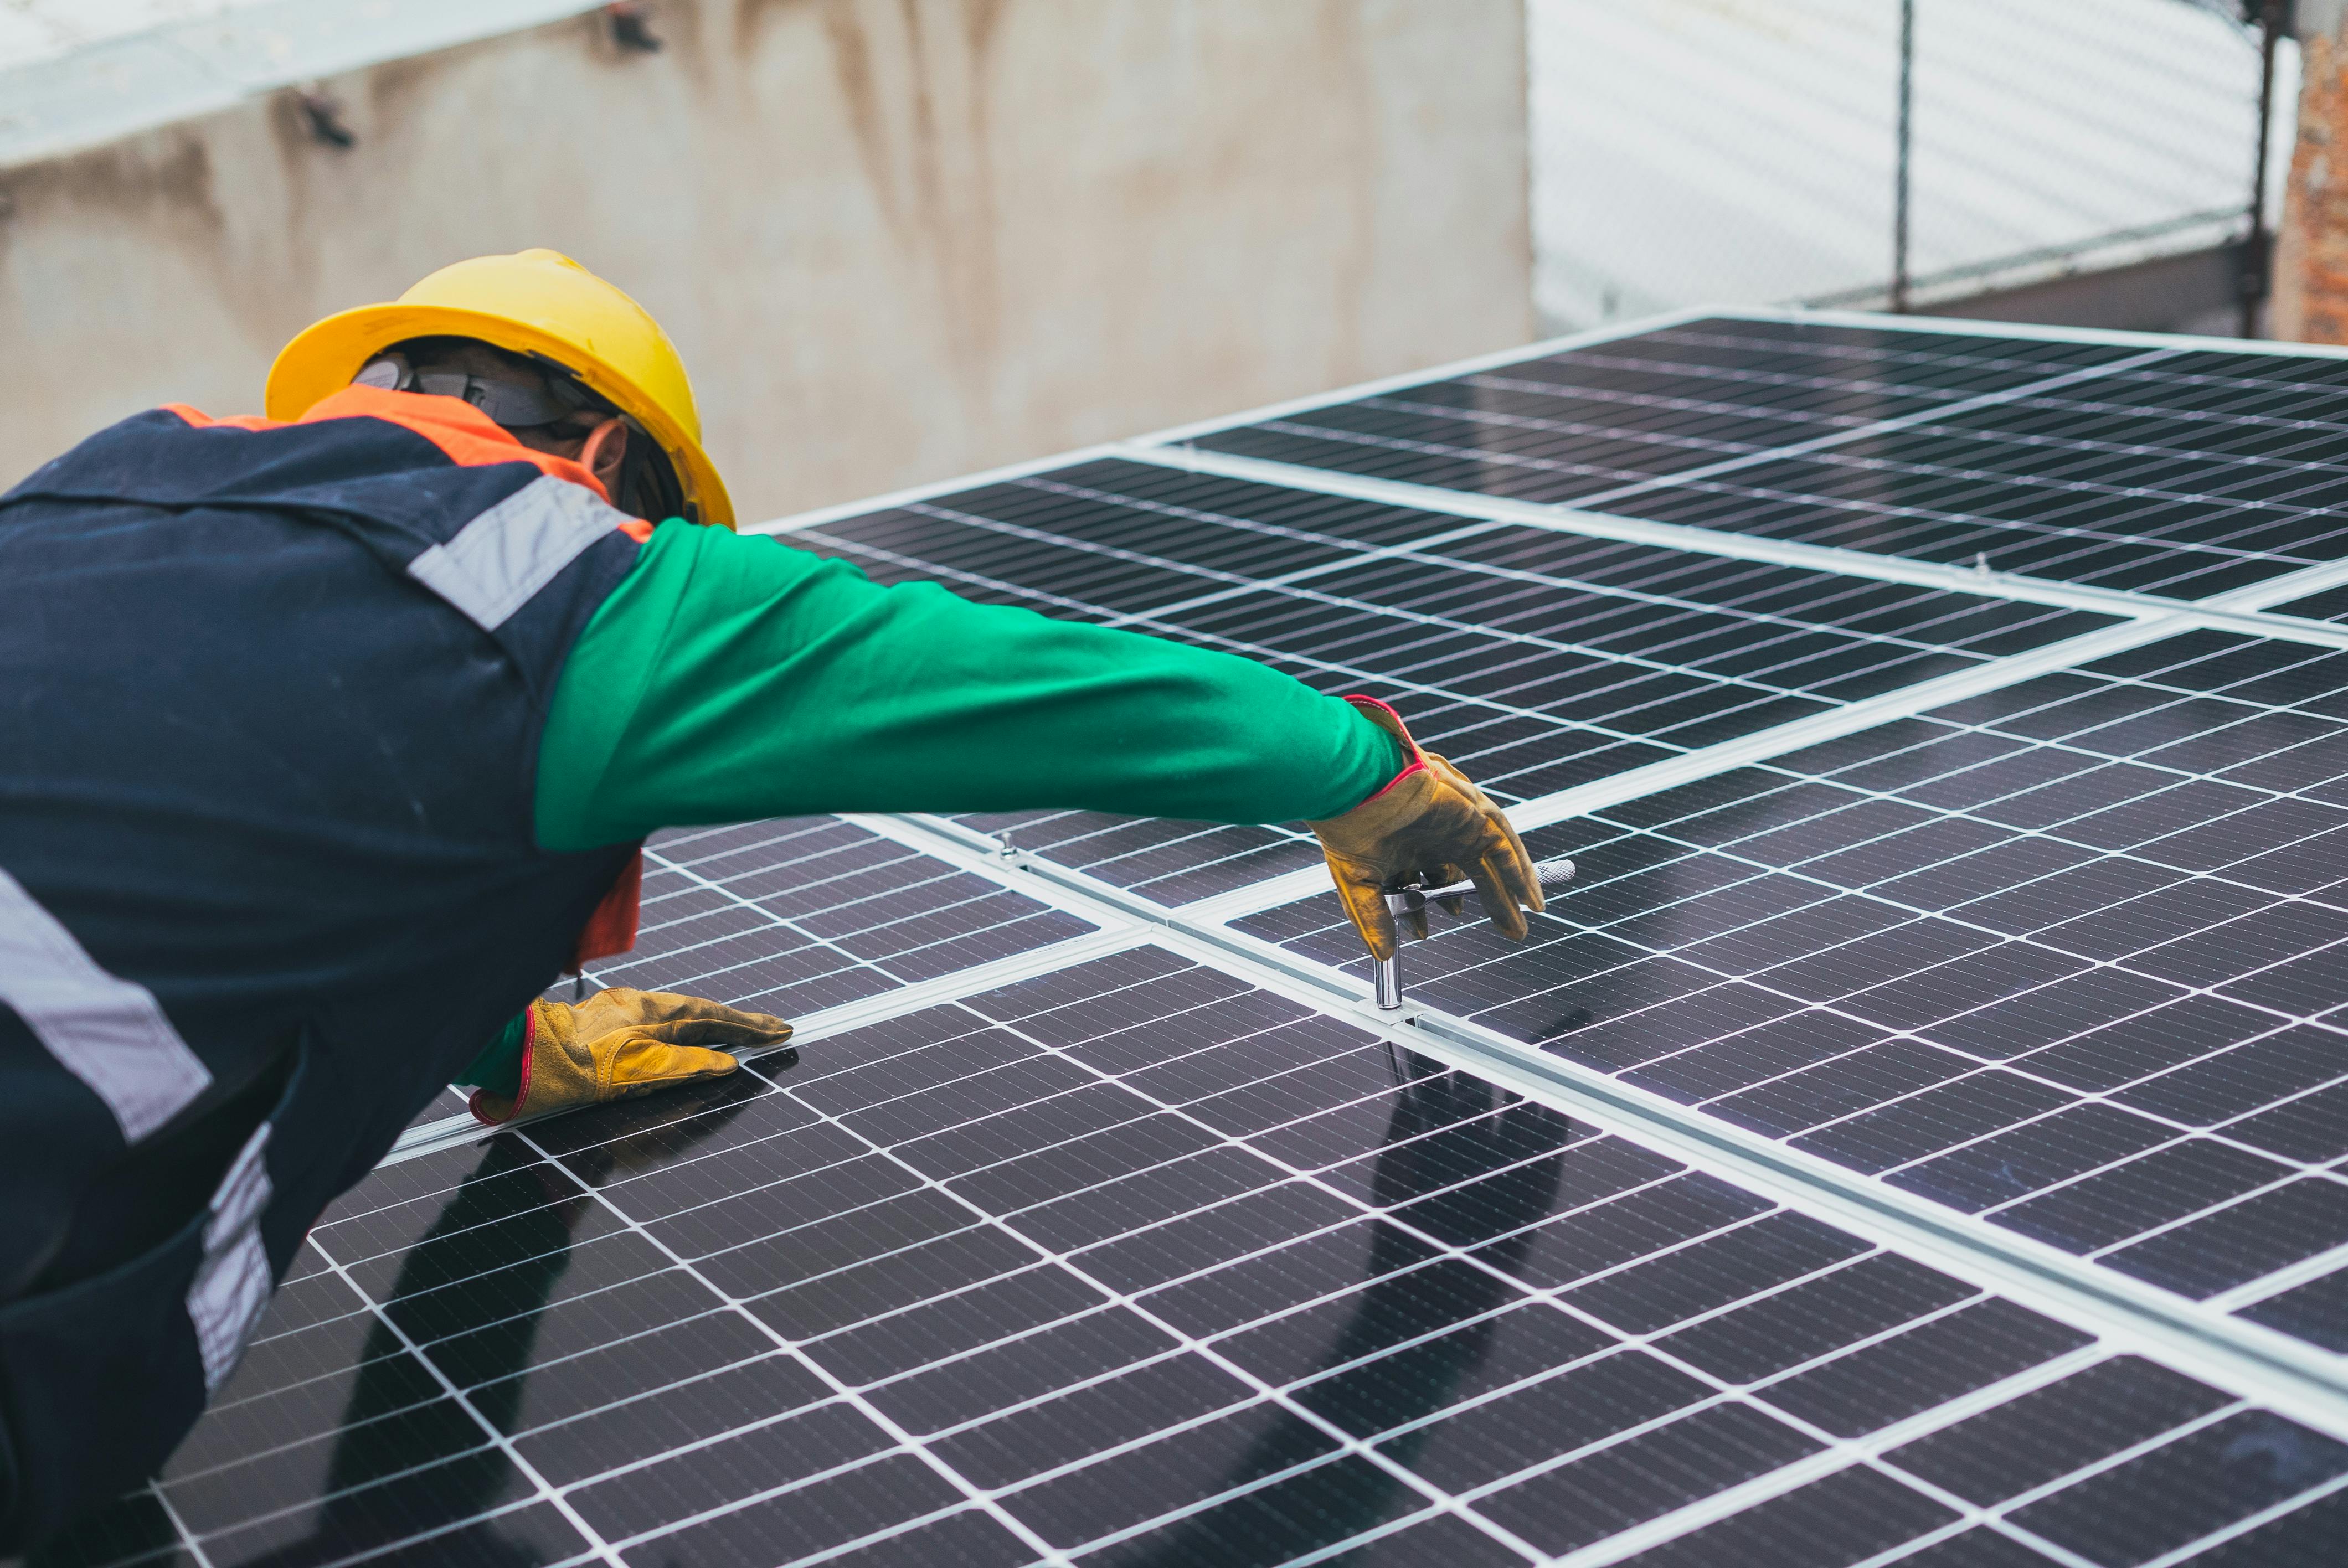 Solar Technician Installing Solar Panel · Free Stock Photo